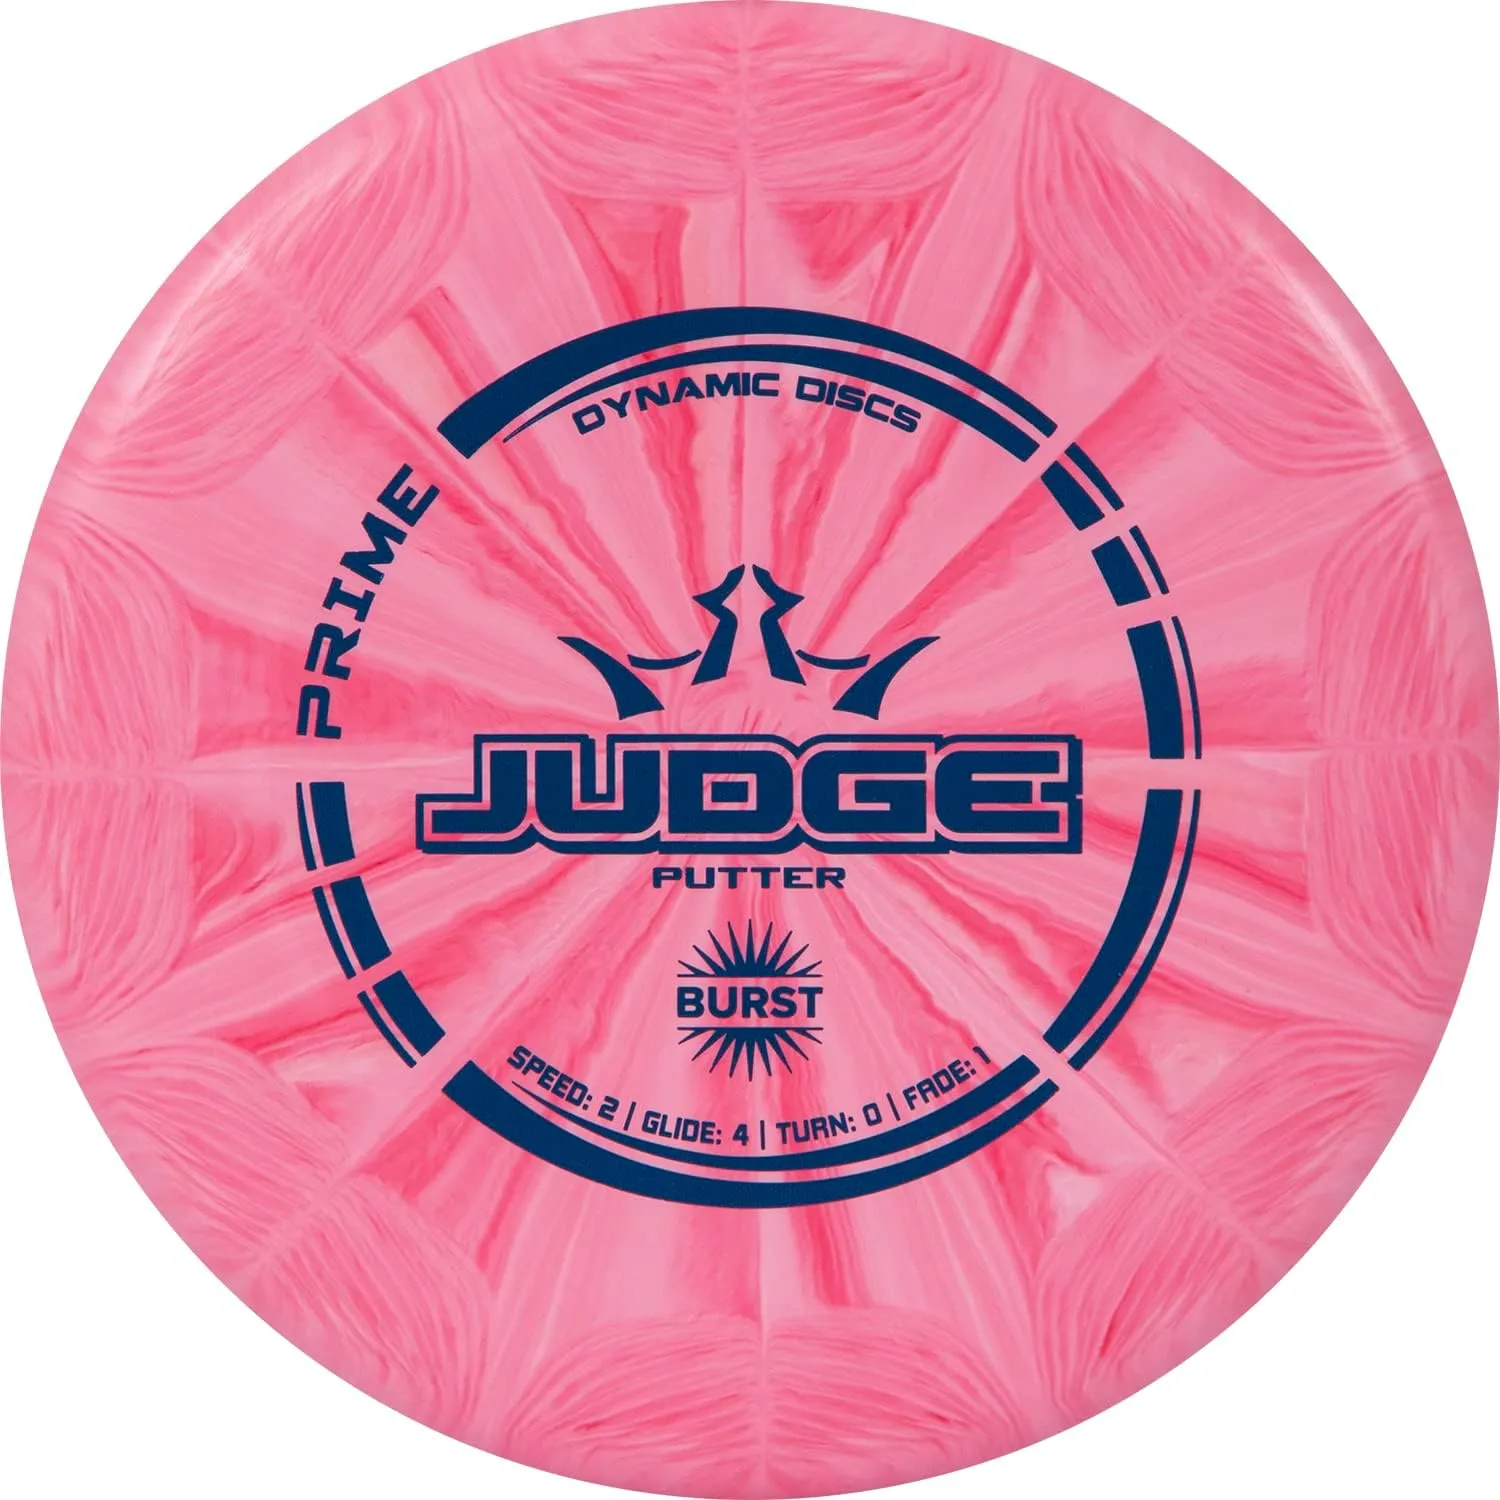 Dynamic Discs Prime Burst Judge Disc Golf Putter 170g Plus